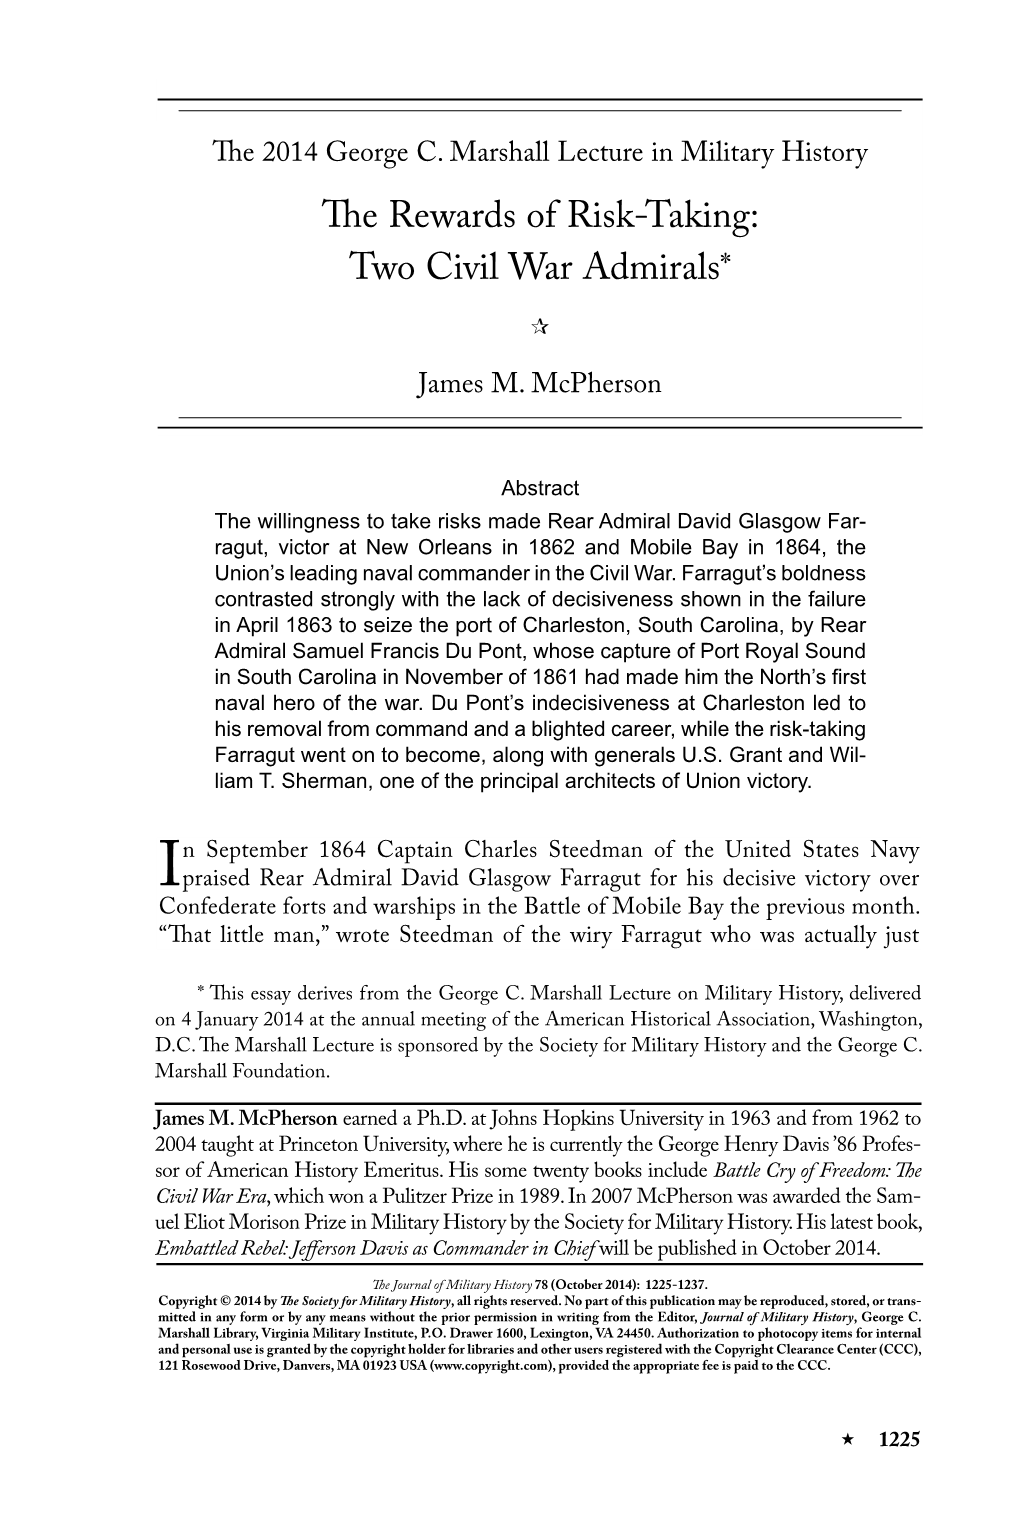 The Rewards of Risk-Taking: Two Civil War Admirals* 